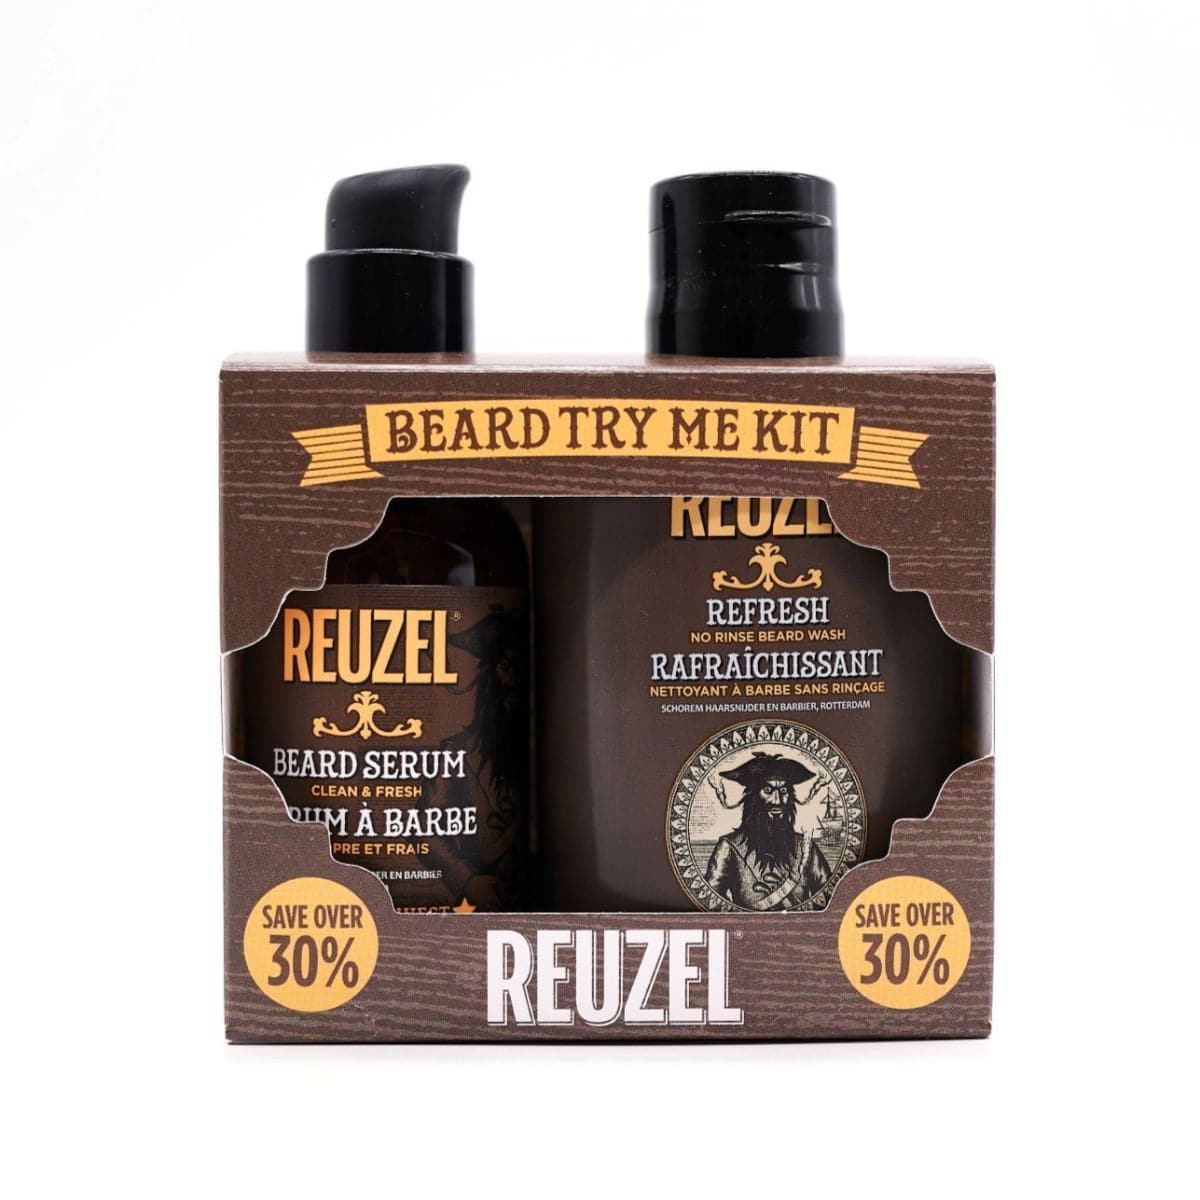 Clean & Fresh Beard Try Me Kit Contains 1 REFRESH No Rinse Beard Wash (3.38oz/100ml) & 1 Wood & Spice Beard Serum (2oz/53ml) 